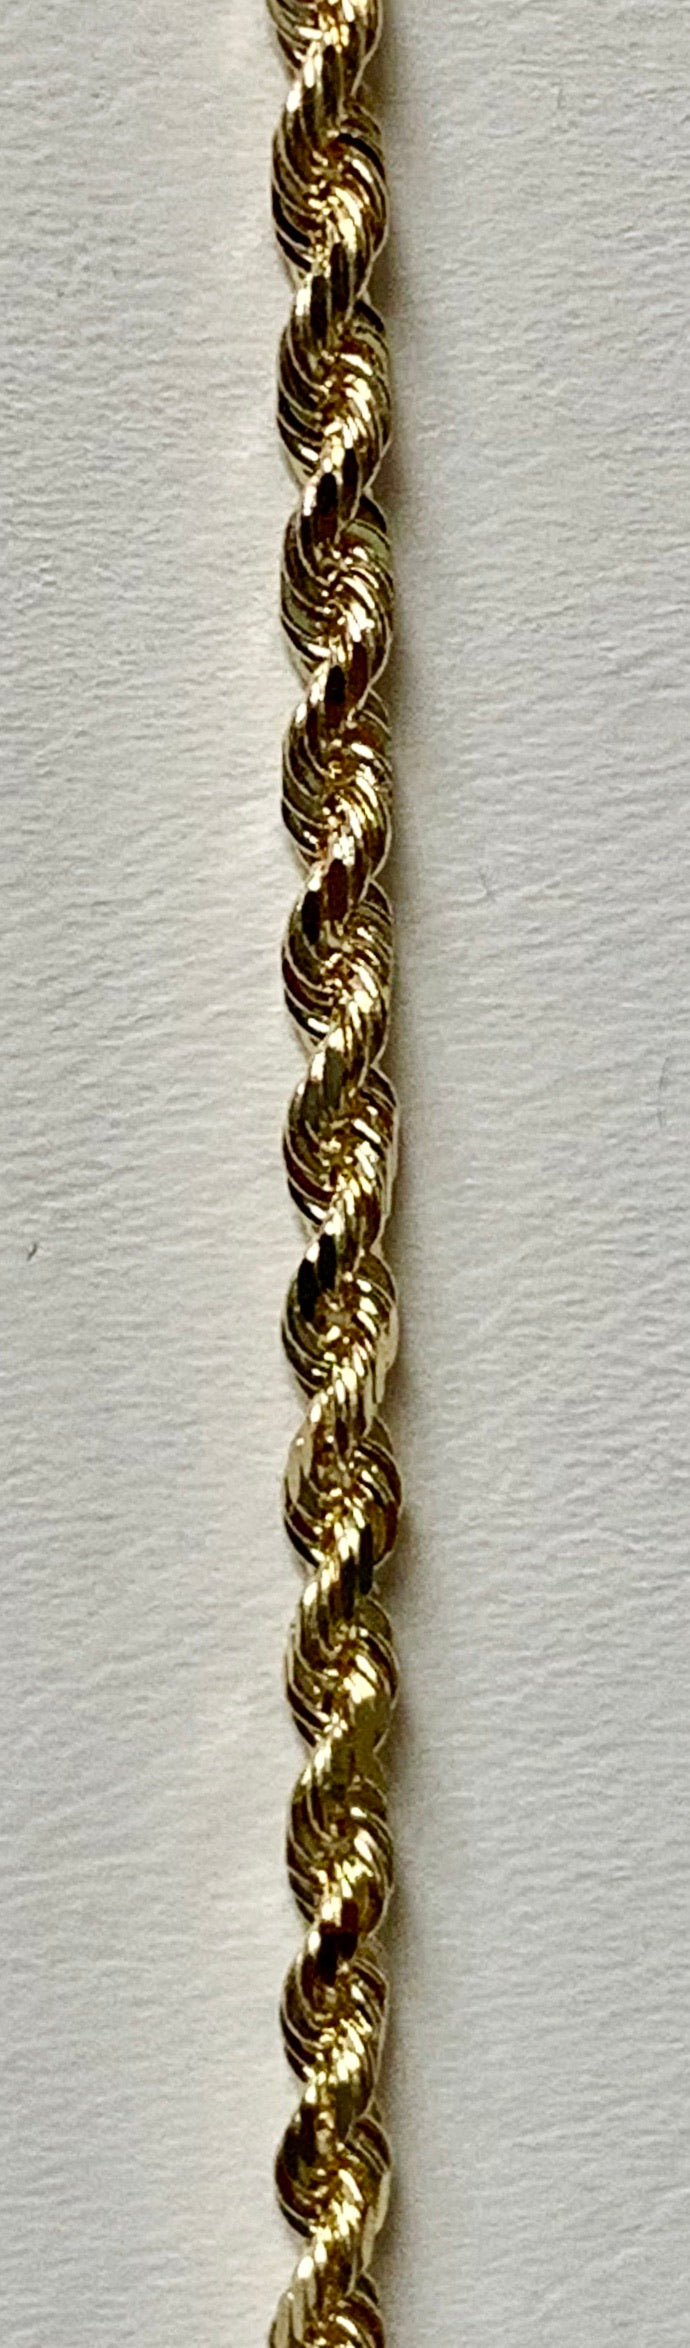 14K Yellow Gold Diamond Cut Rope Chain